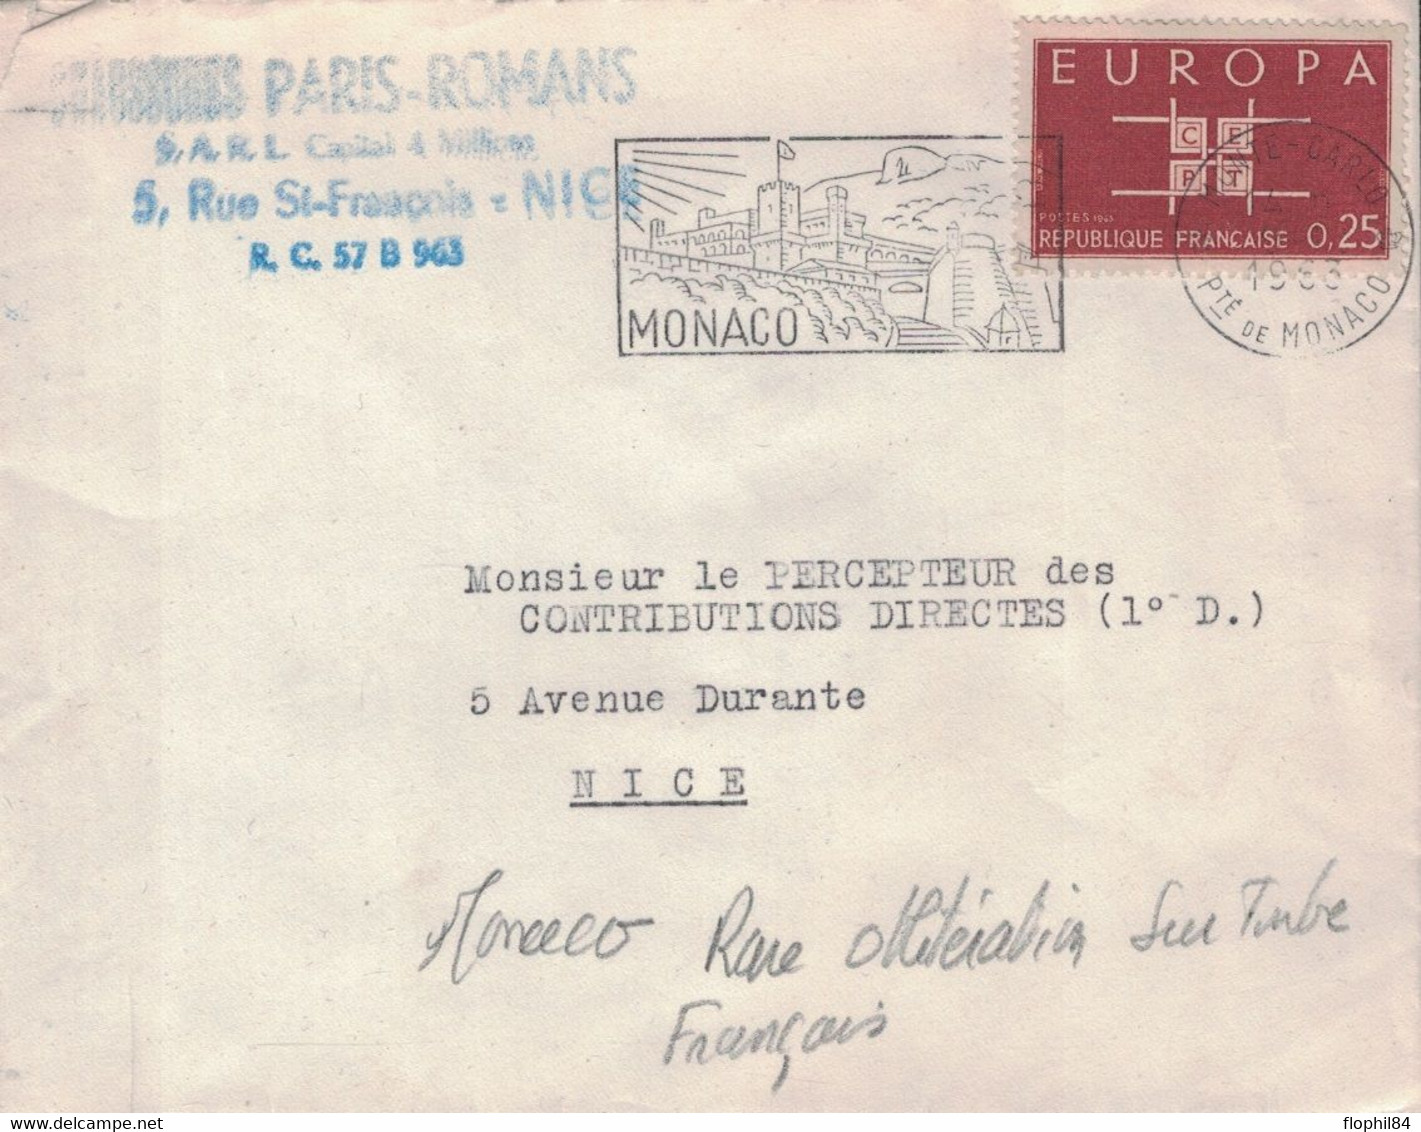 MONACO - TIMBRE DE FRANCE EUROPA 0.25C - ANNULATION FLAMME DE MONACO - 14-2-1963 - PEU COURANT. - Briefe U. Dokumente